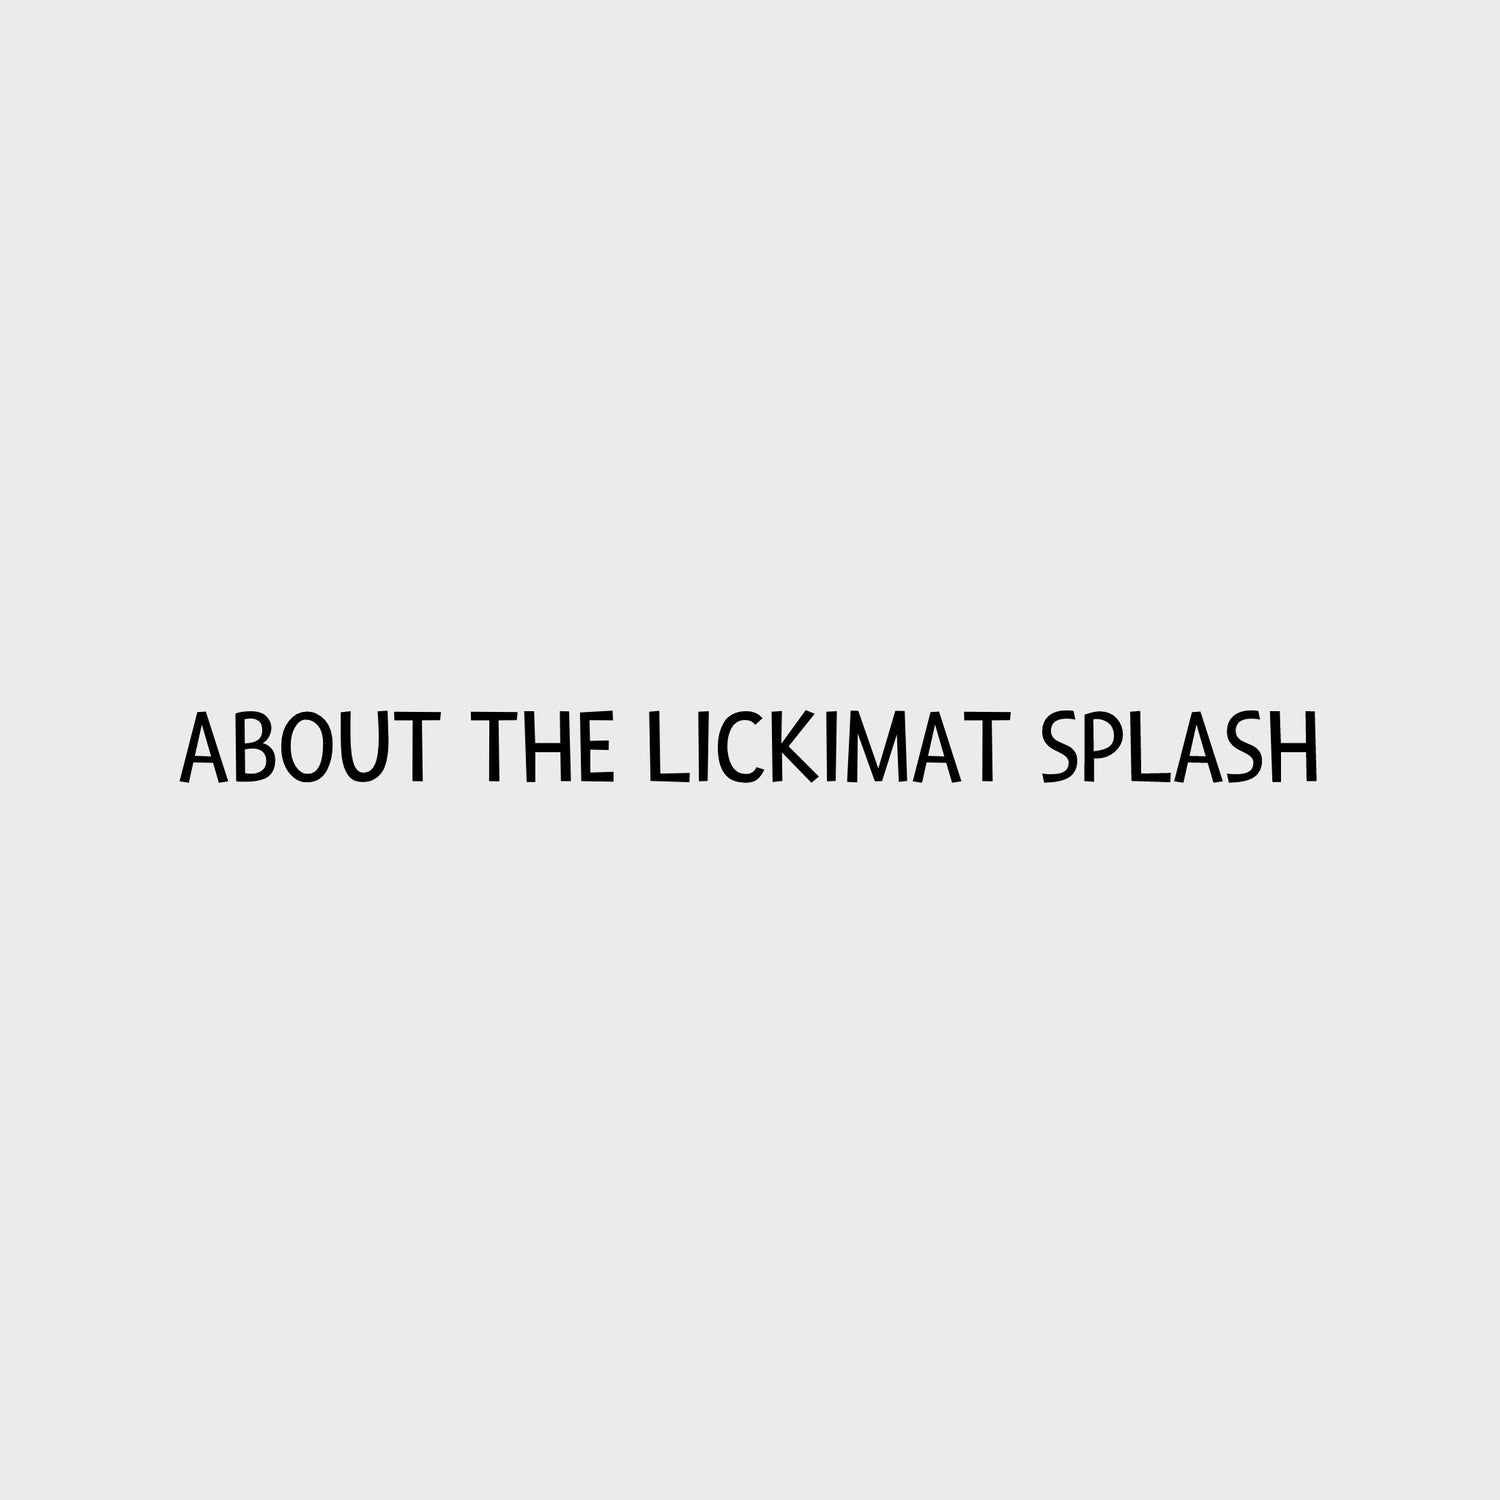 Video - LickiMat Splash